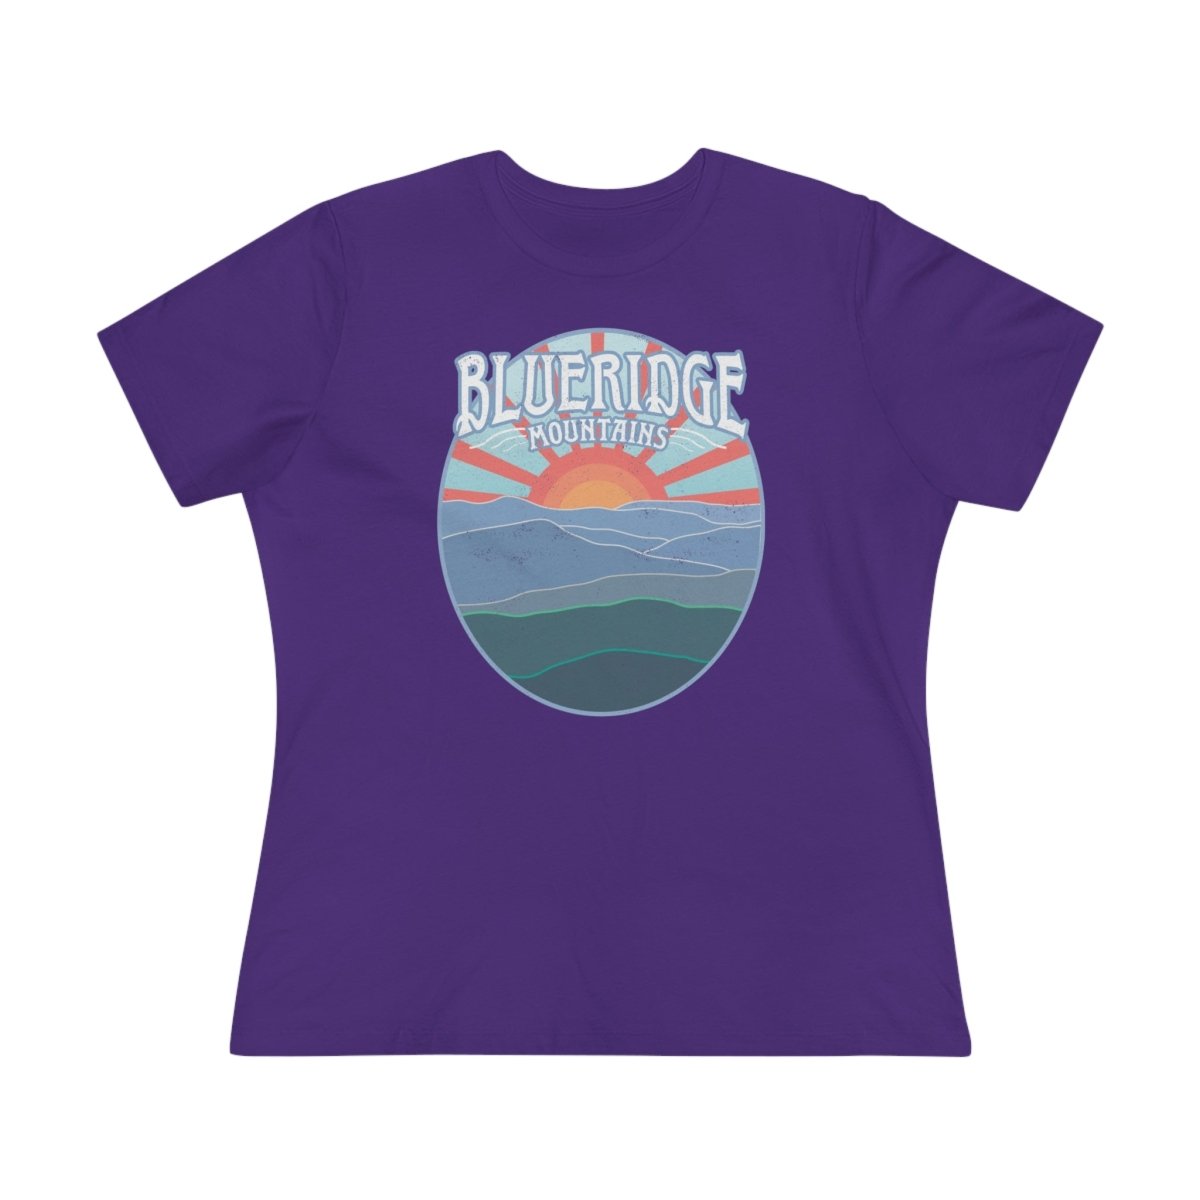 Blue Ridge Women's Premium Relaxed Fit T-Shirt, East Coast, Mountains, Appalachian Trail. Outdoors, Nature